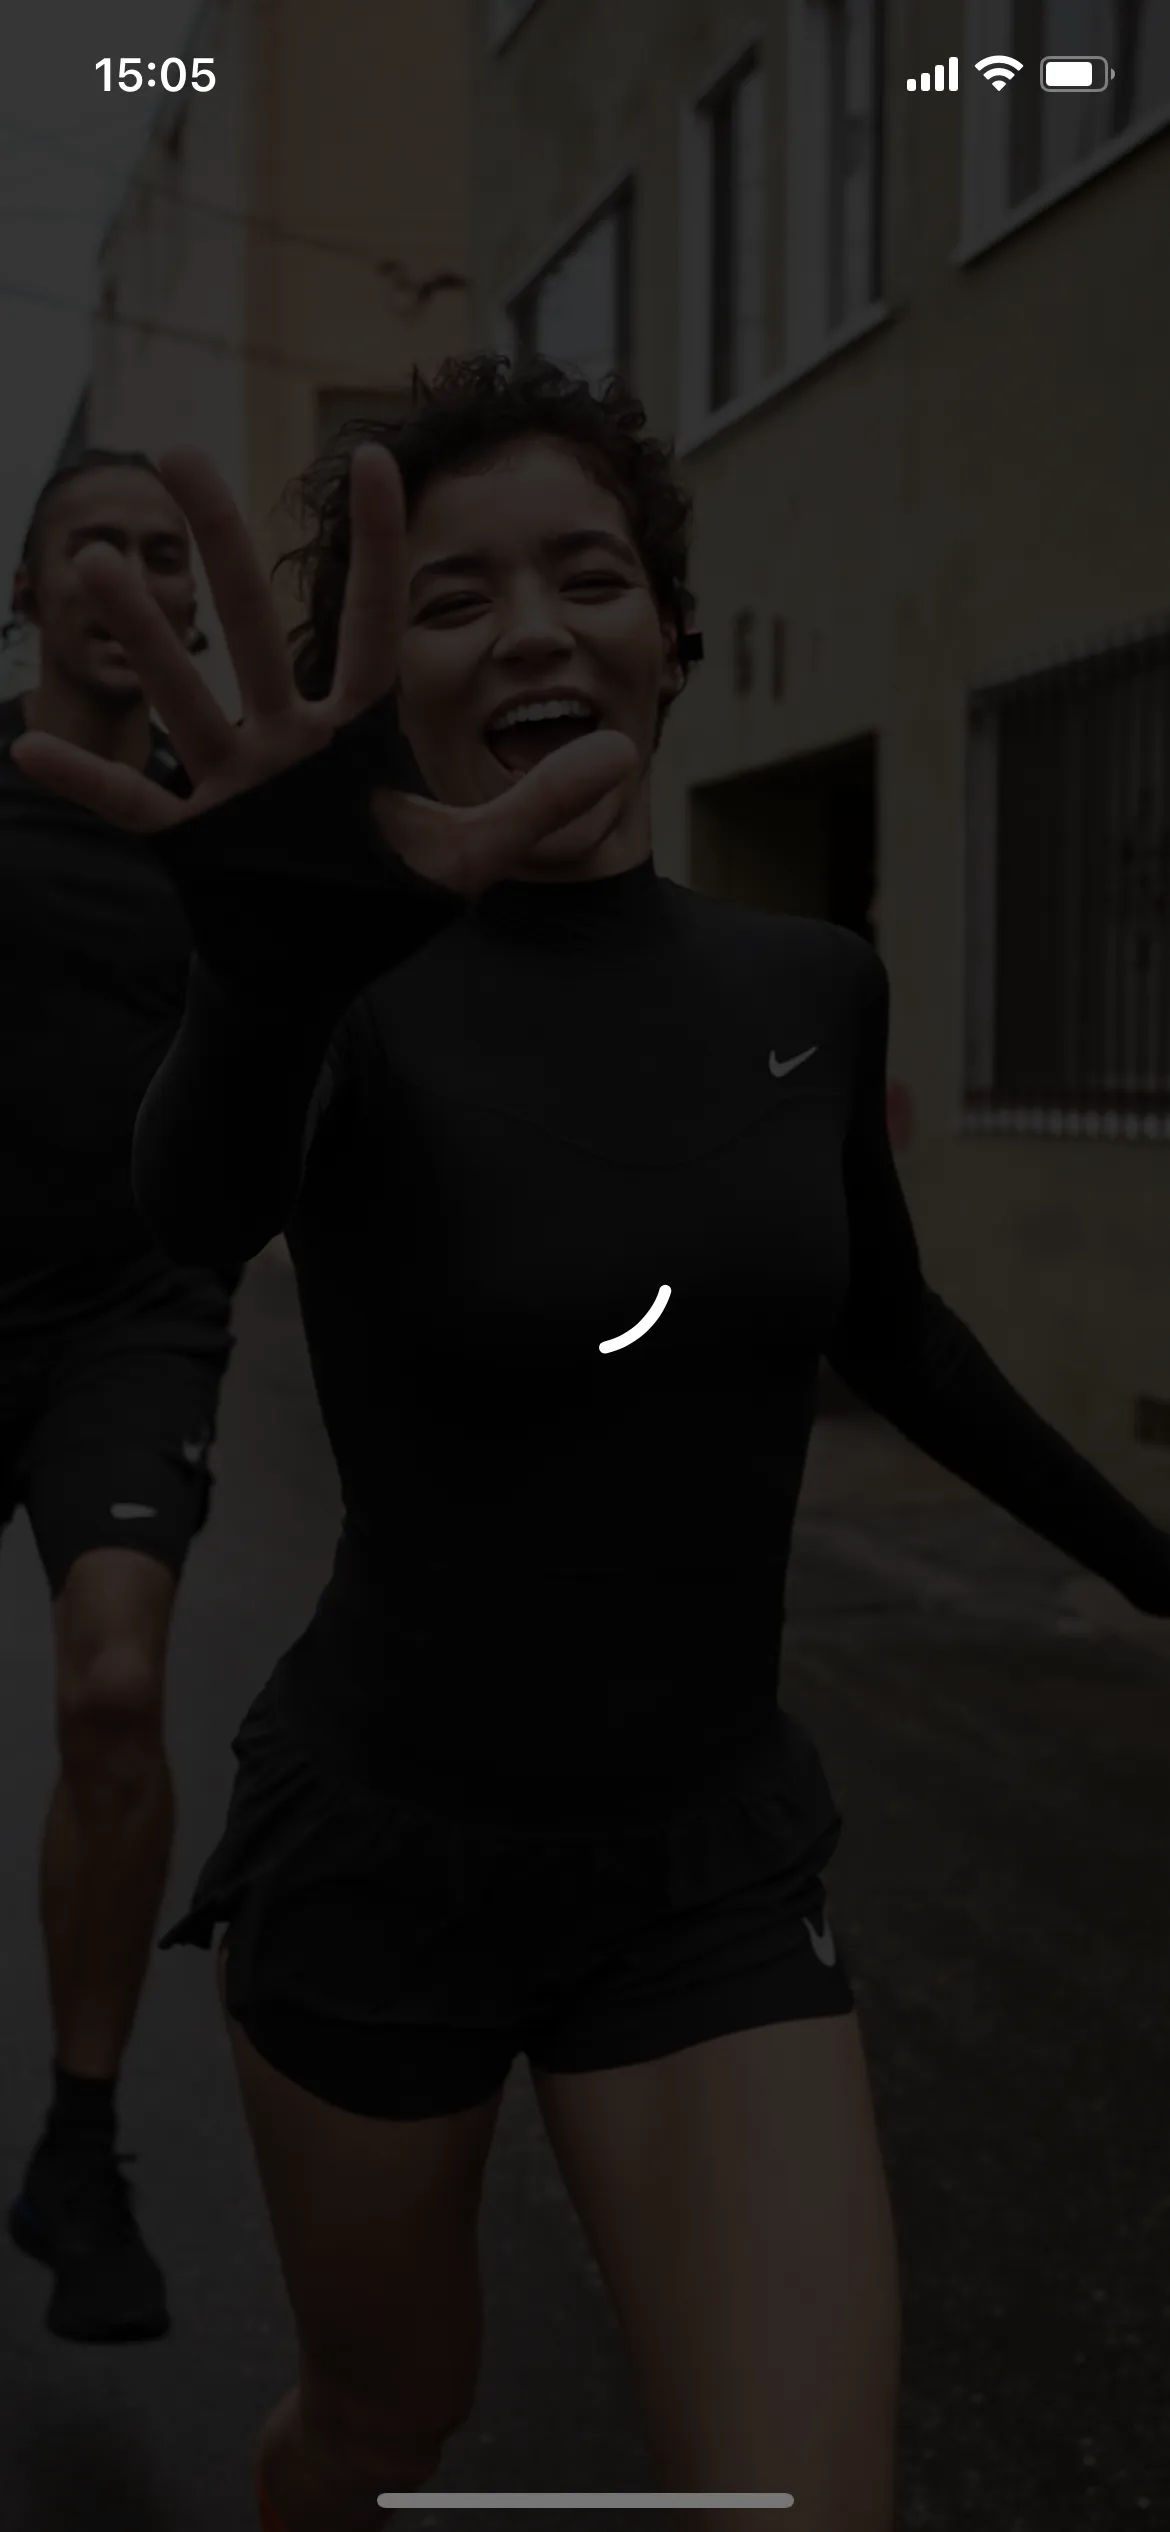 Nike Run Club オンボーディング screen